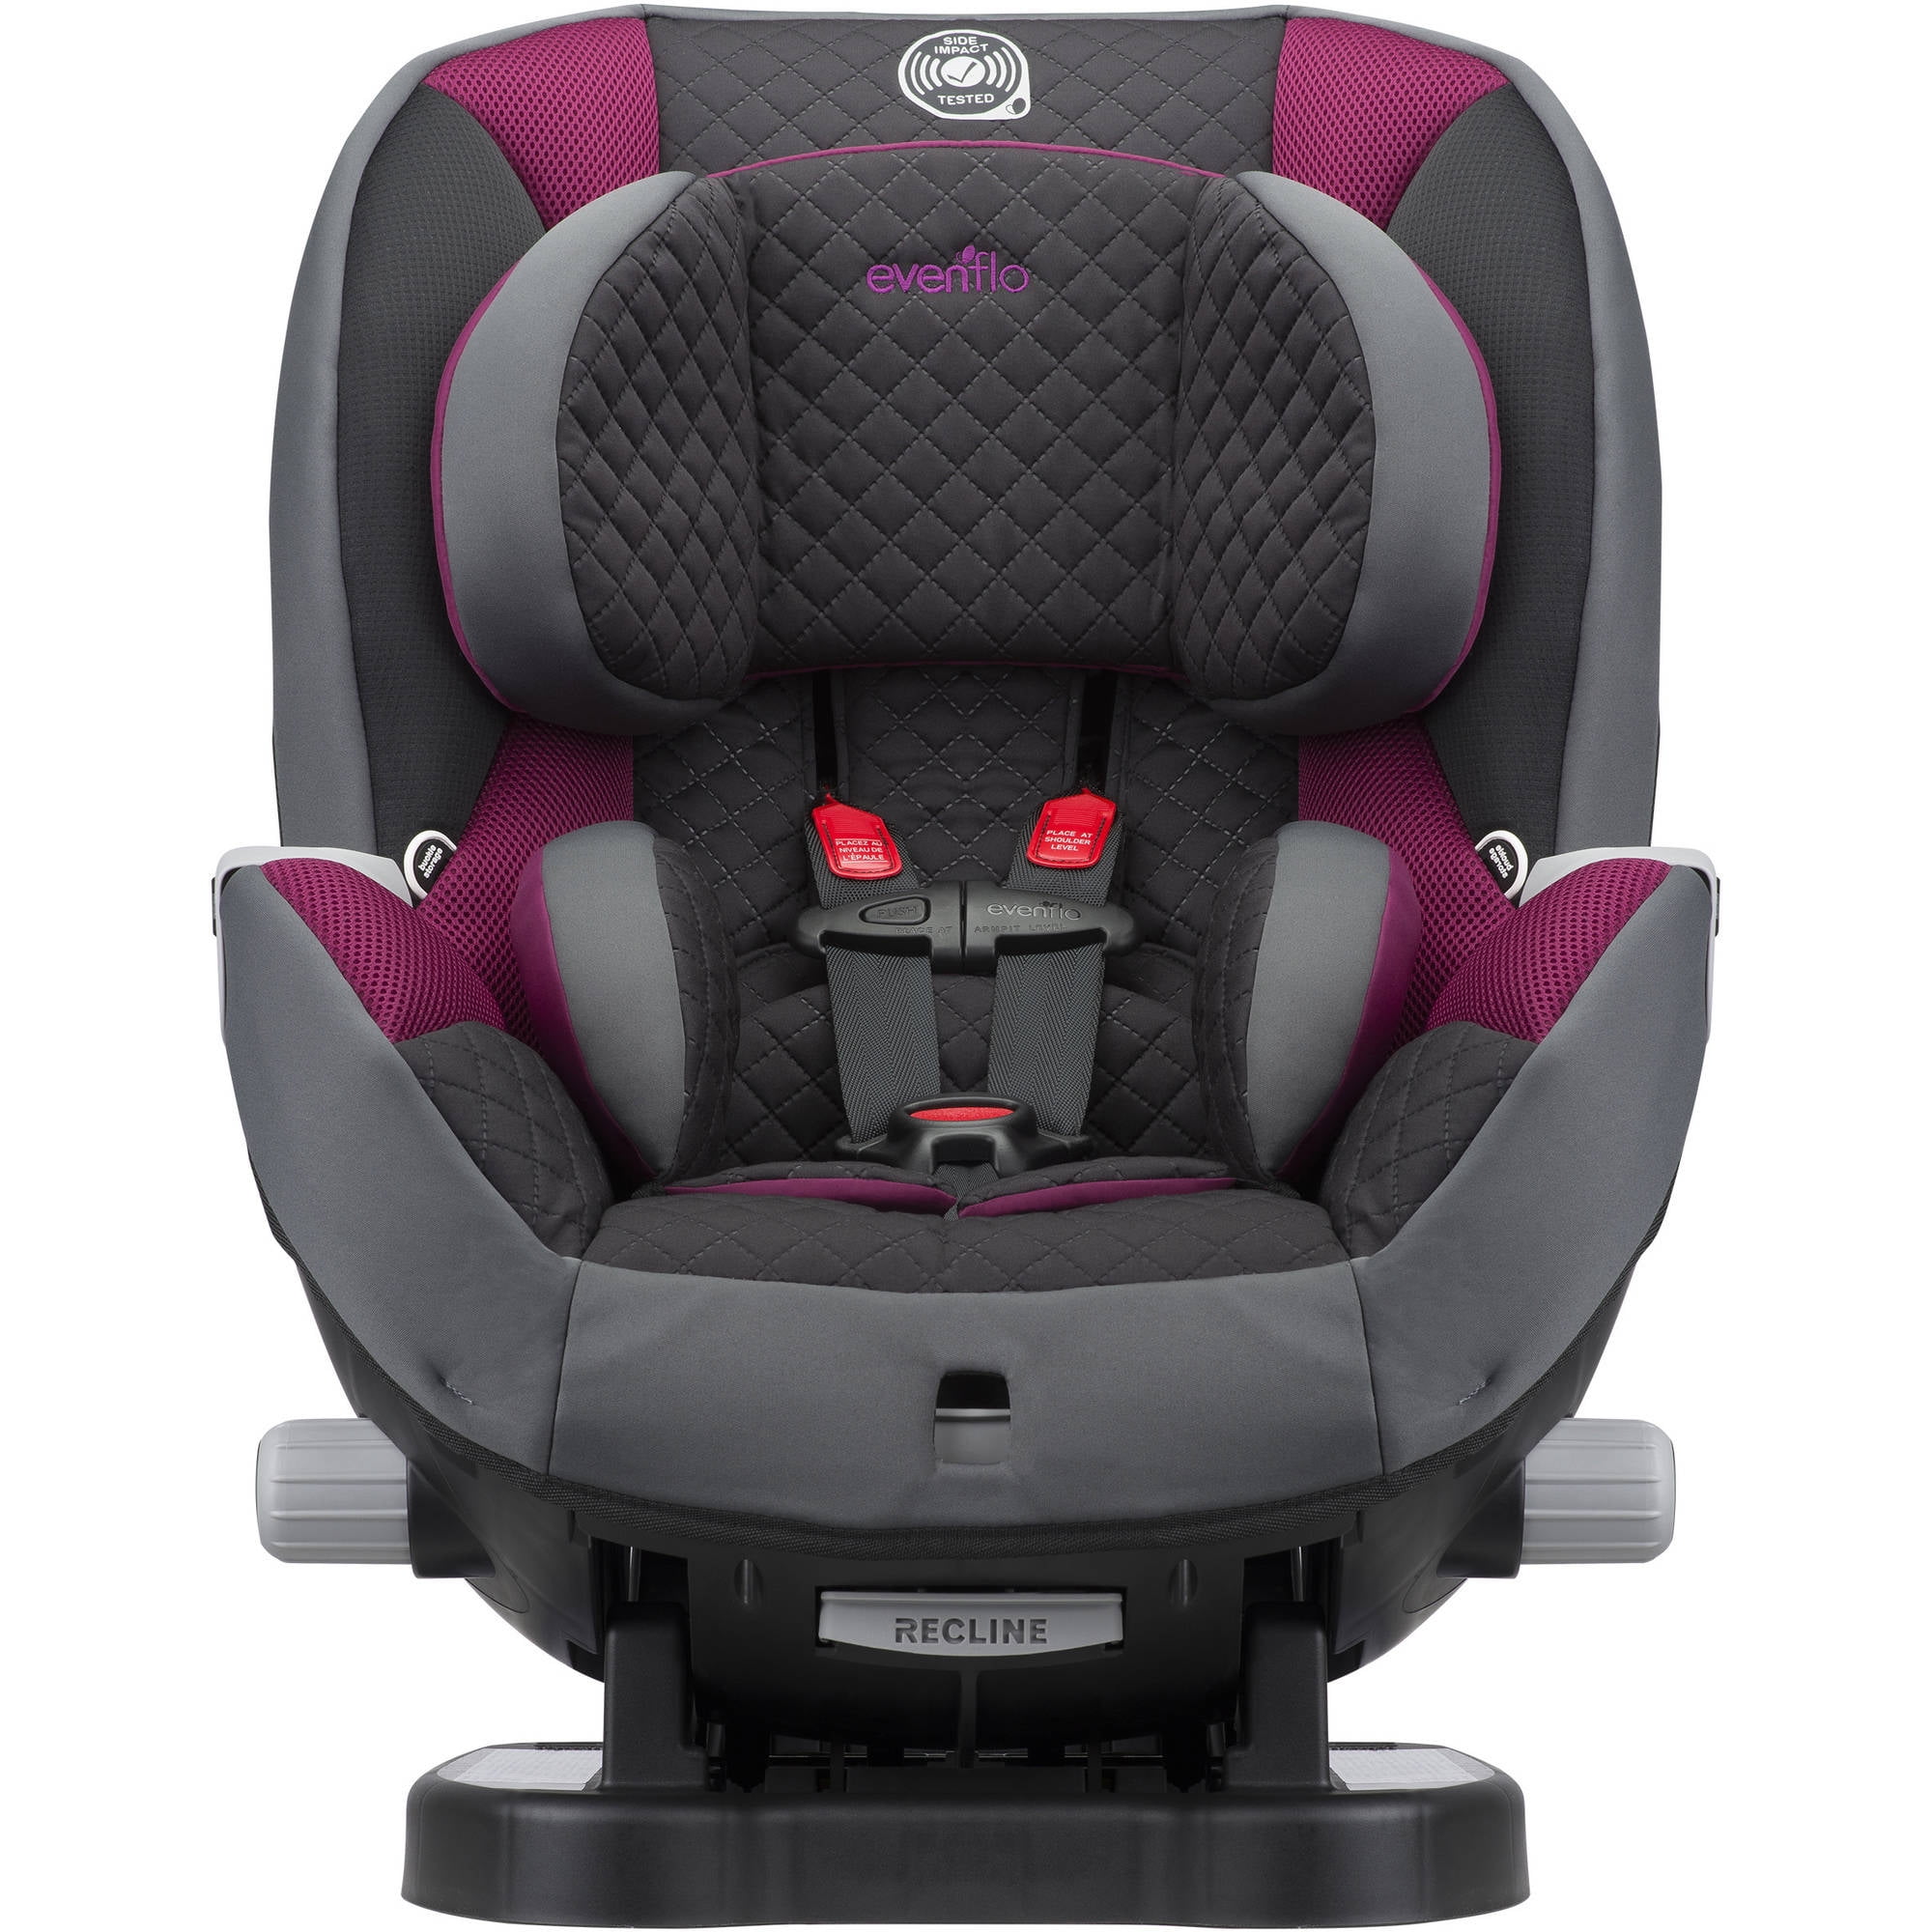  Evenflo Baby Car Seat - kaerusdesign